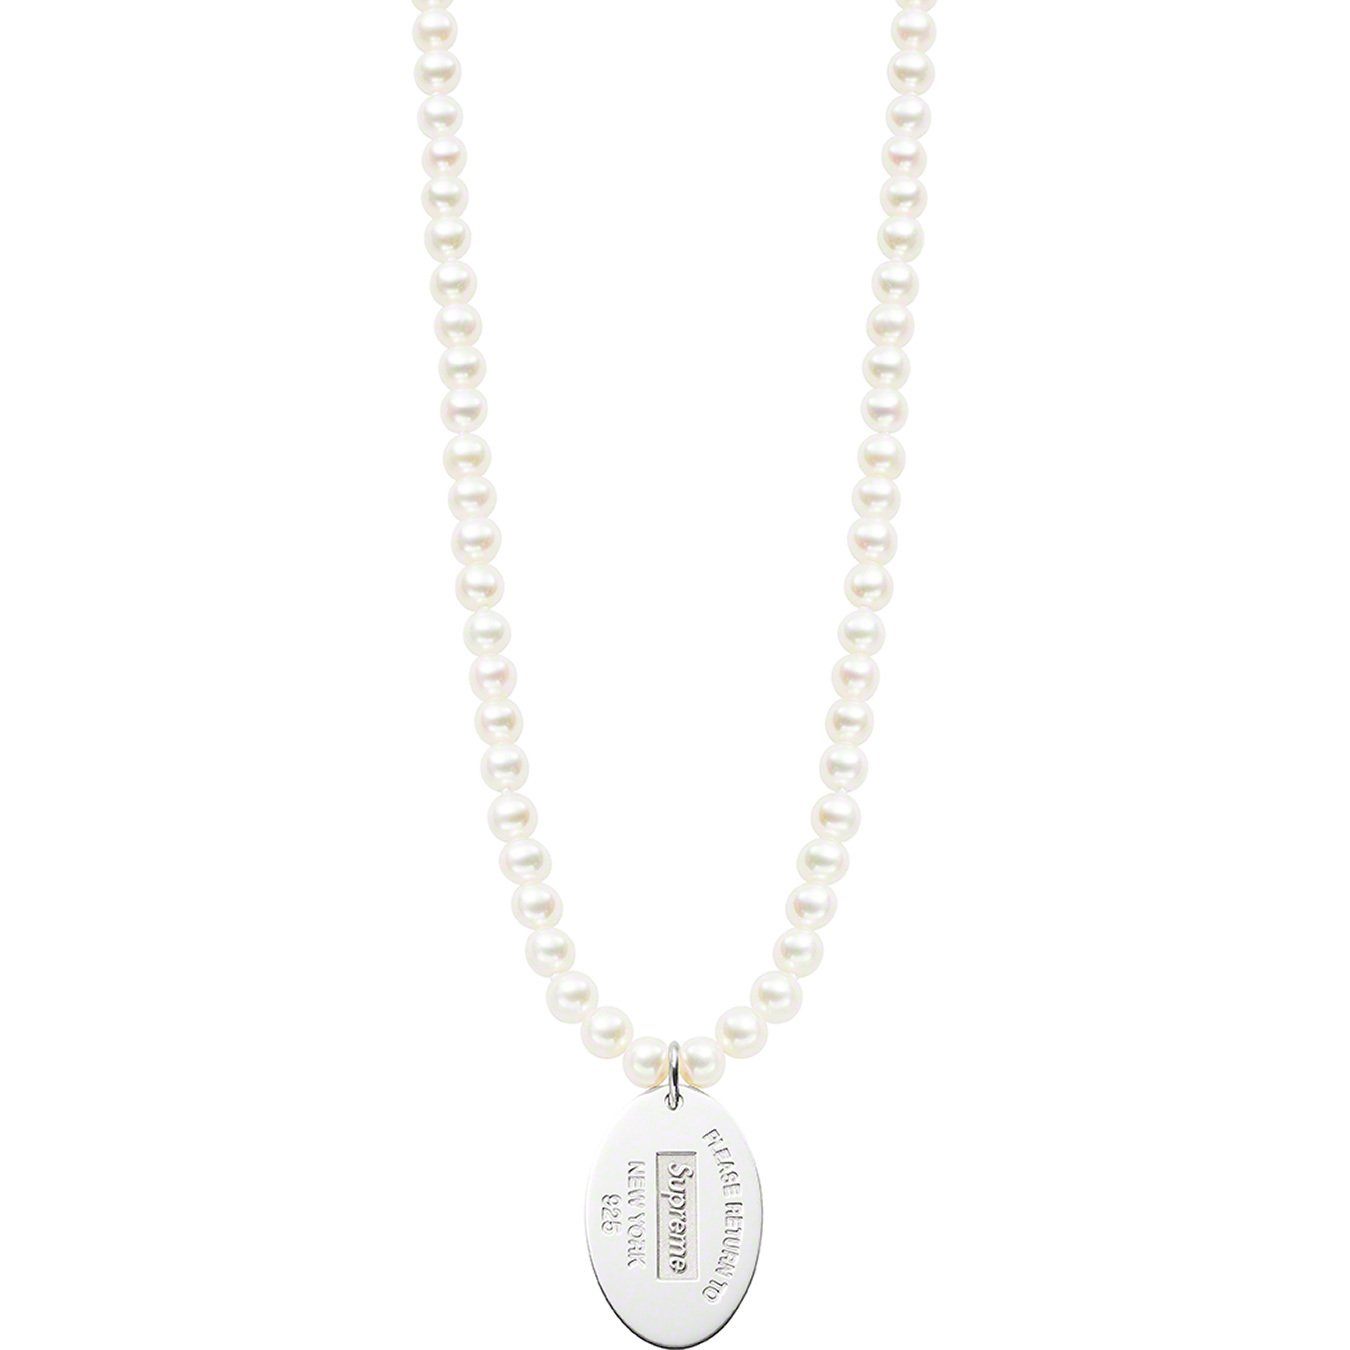 閱卷室》【現貨】Supreme Tiffany & Co.Pearl Necklace 配件珍珠項鍊首飾飾品| 蝦皮購物